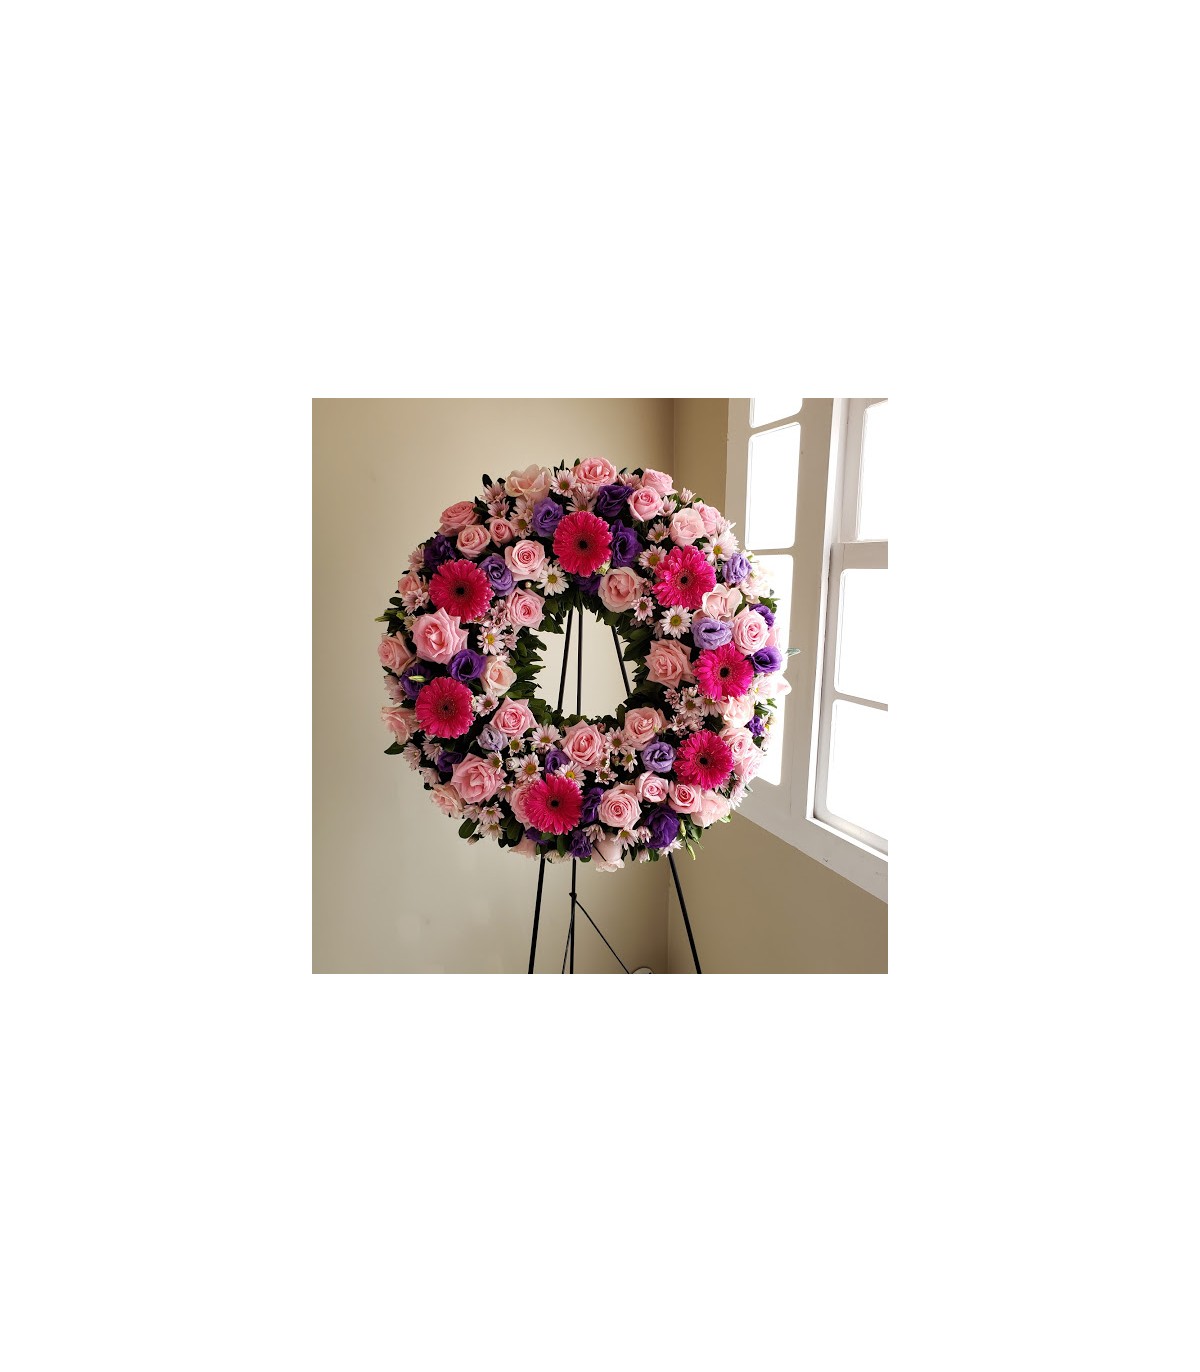 Corona de flores pastel, 20x20 cm, flor seca pastel, corona de